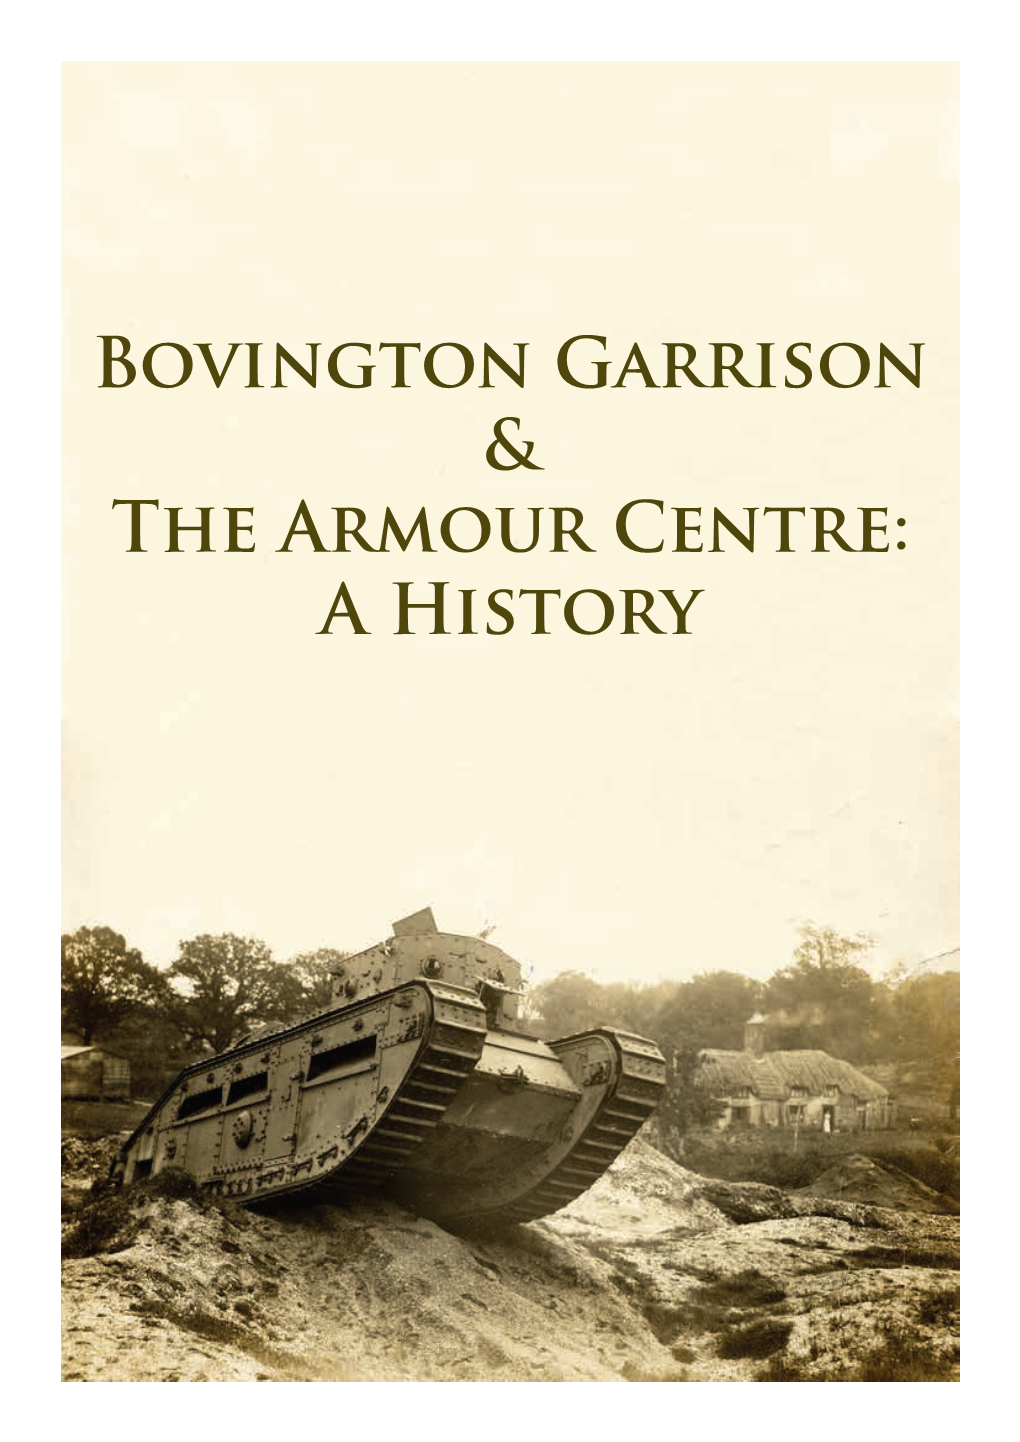 Bovington Garrison & the Armour Centre: a History